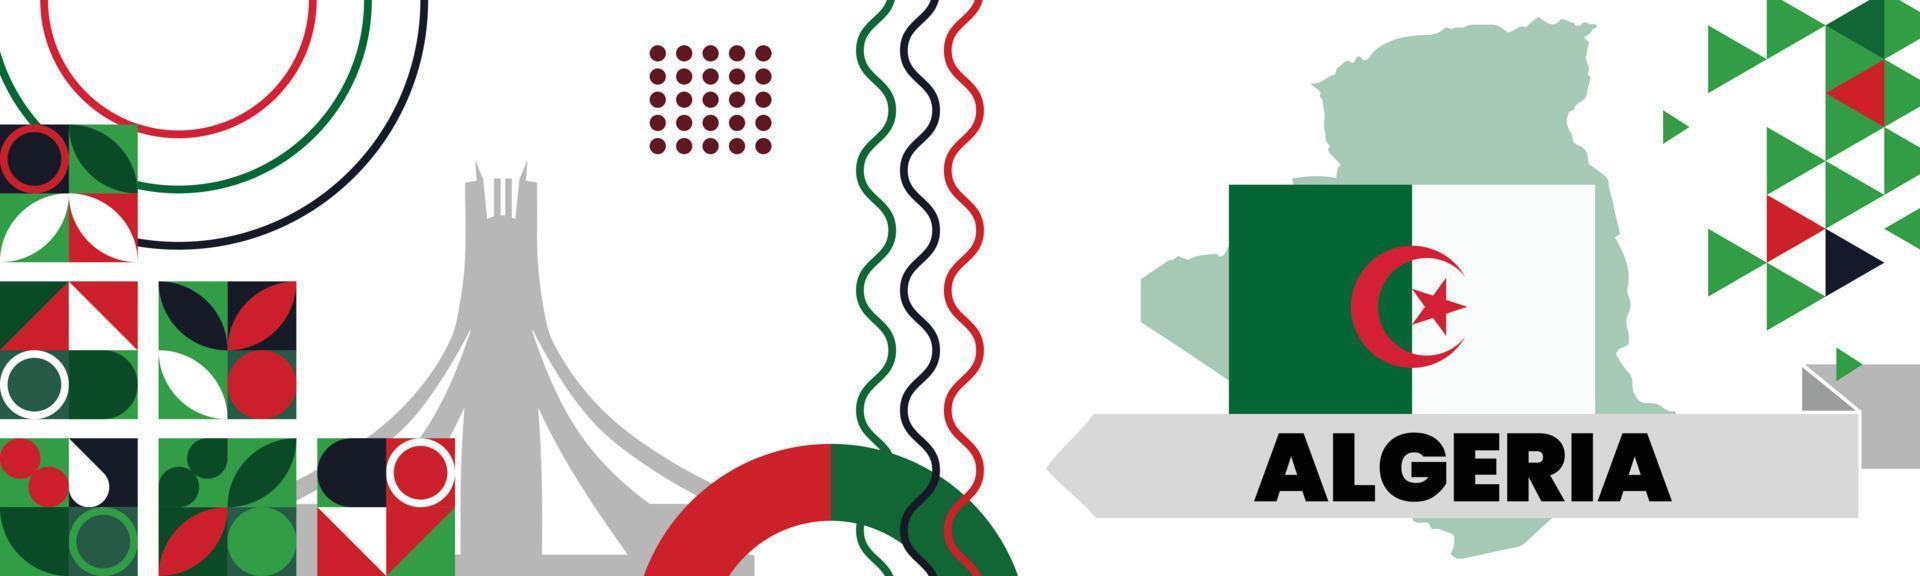 Algeria National Banner vector